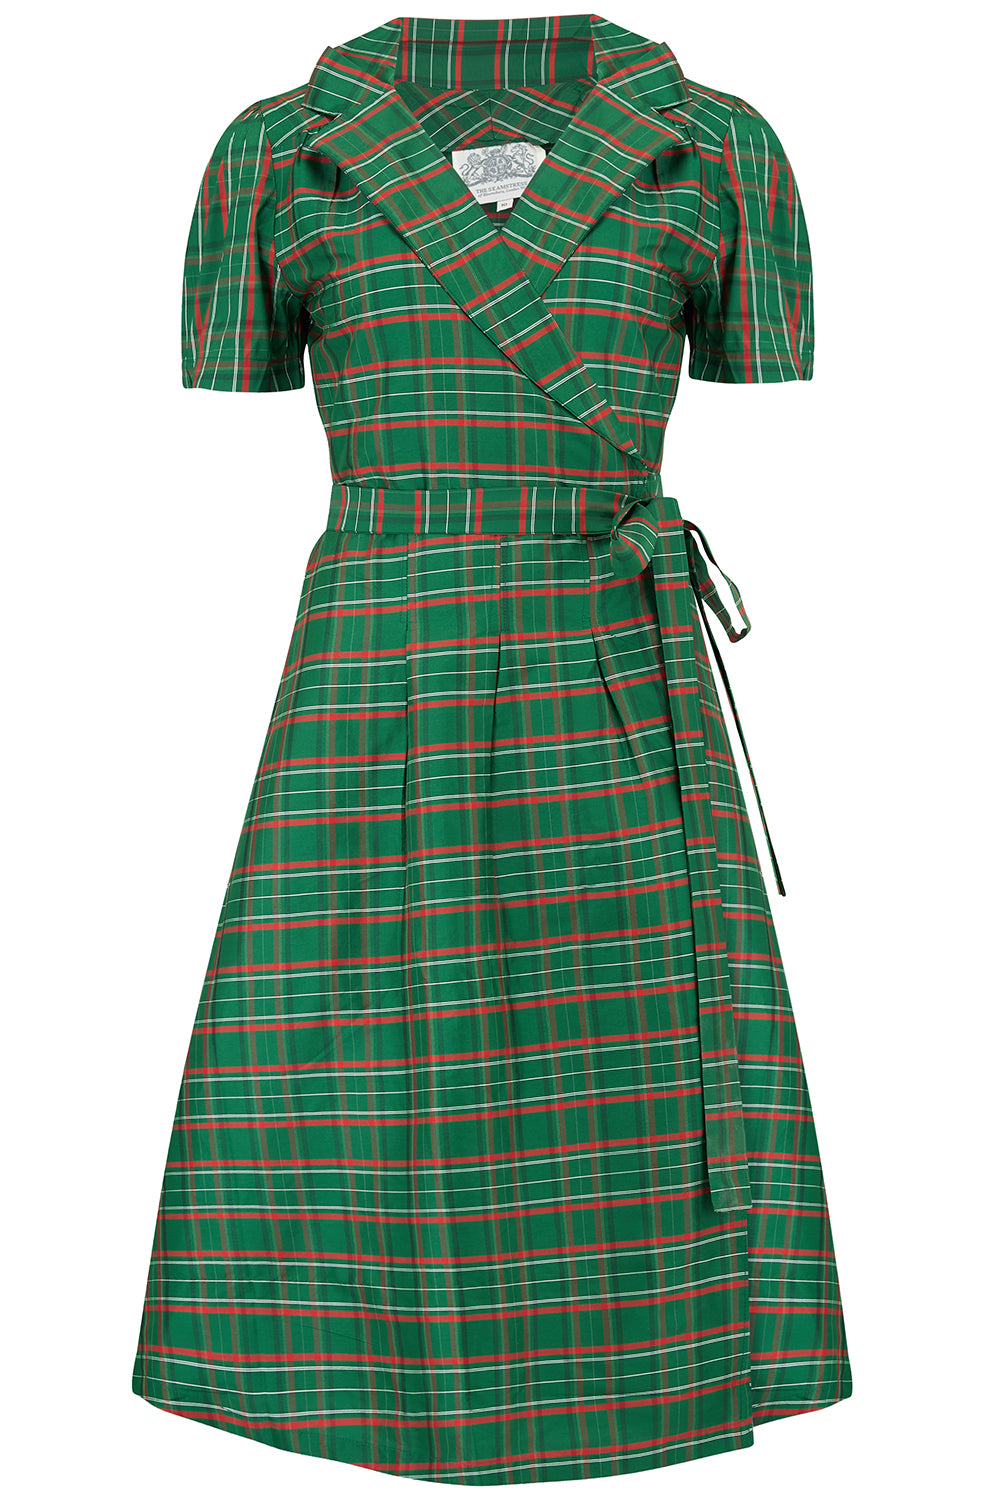 "Peggy" Wrap Dress in Green Taffeta Tartan, Classic 1940s Vintage Style - CC41, Goodwood Revival, Twinwood Festival, Viva Las Vegas Rockabilly Weekend Rock n Romance The Seamstress of Bloomsbury